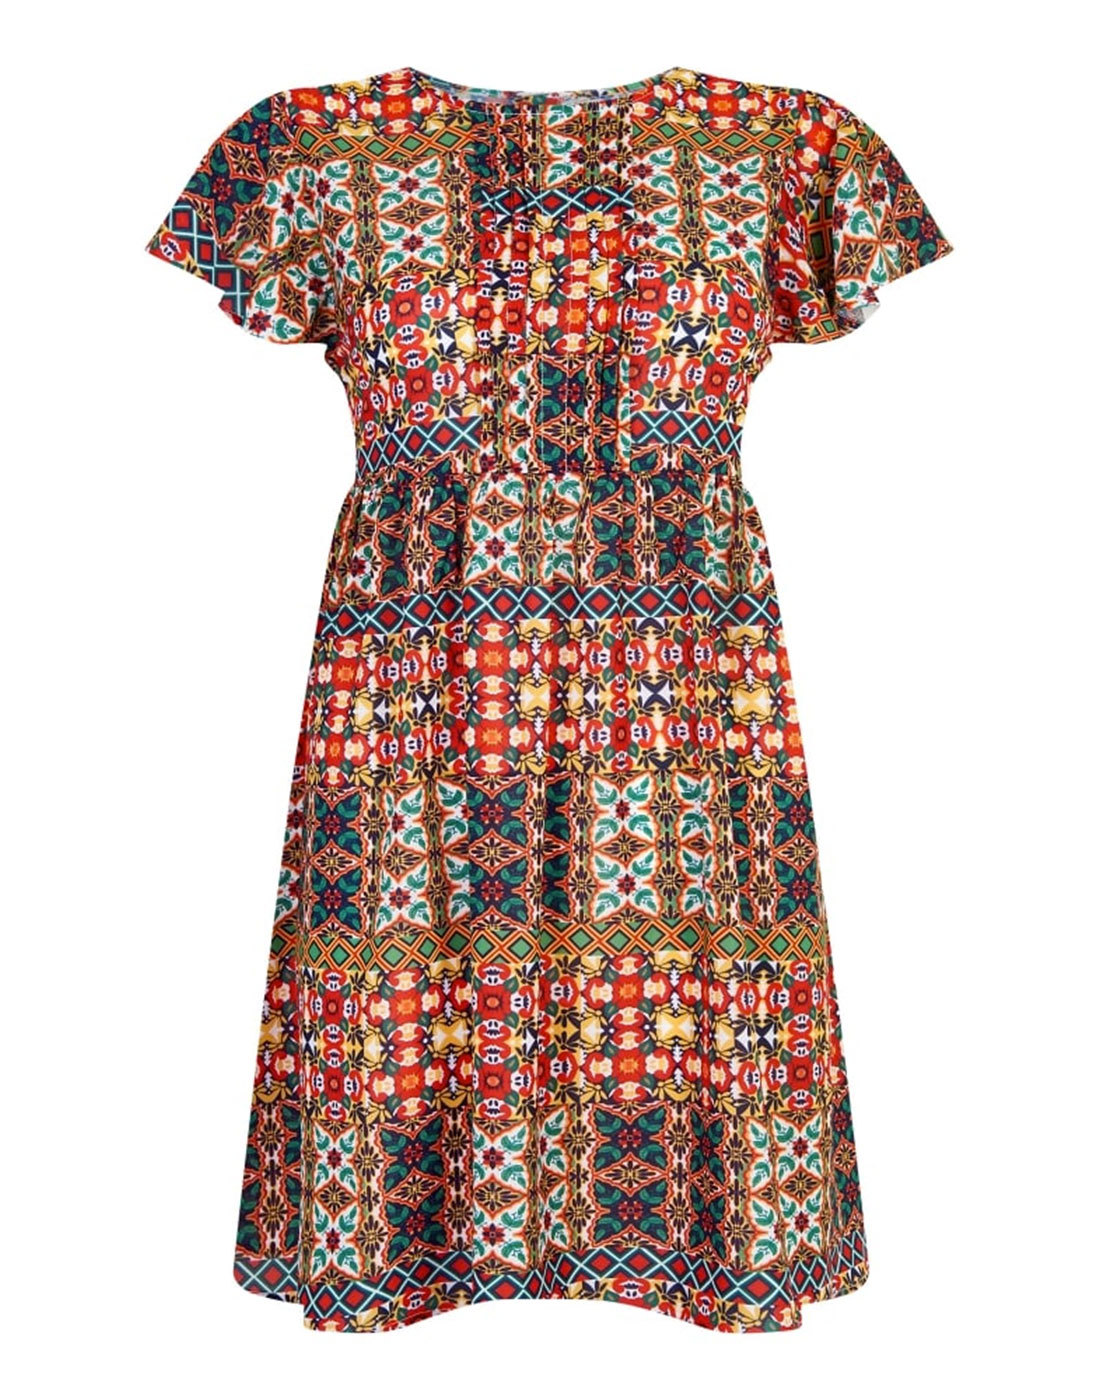 Sally BRIGHT & BEAUTIFUL Moroccan Tile Smock Dress